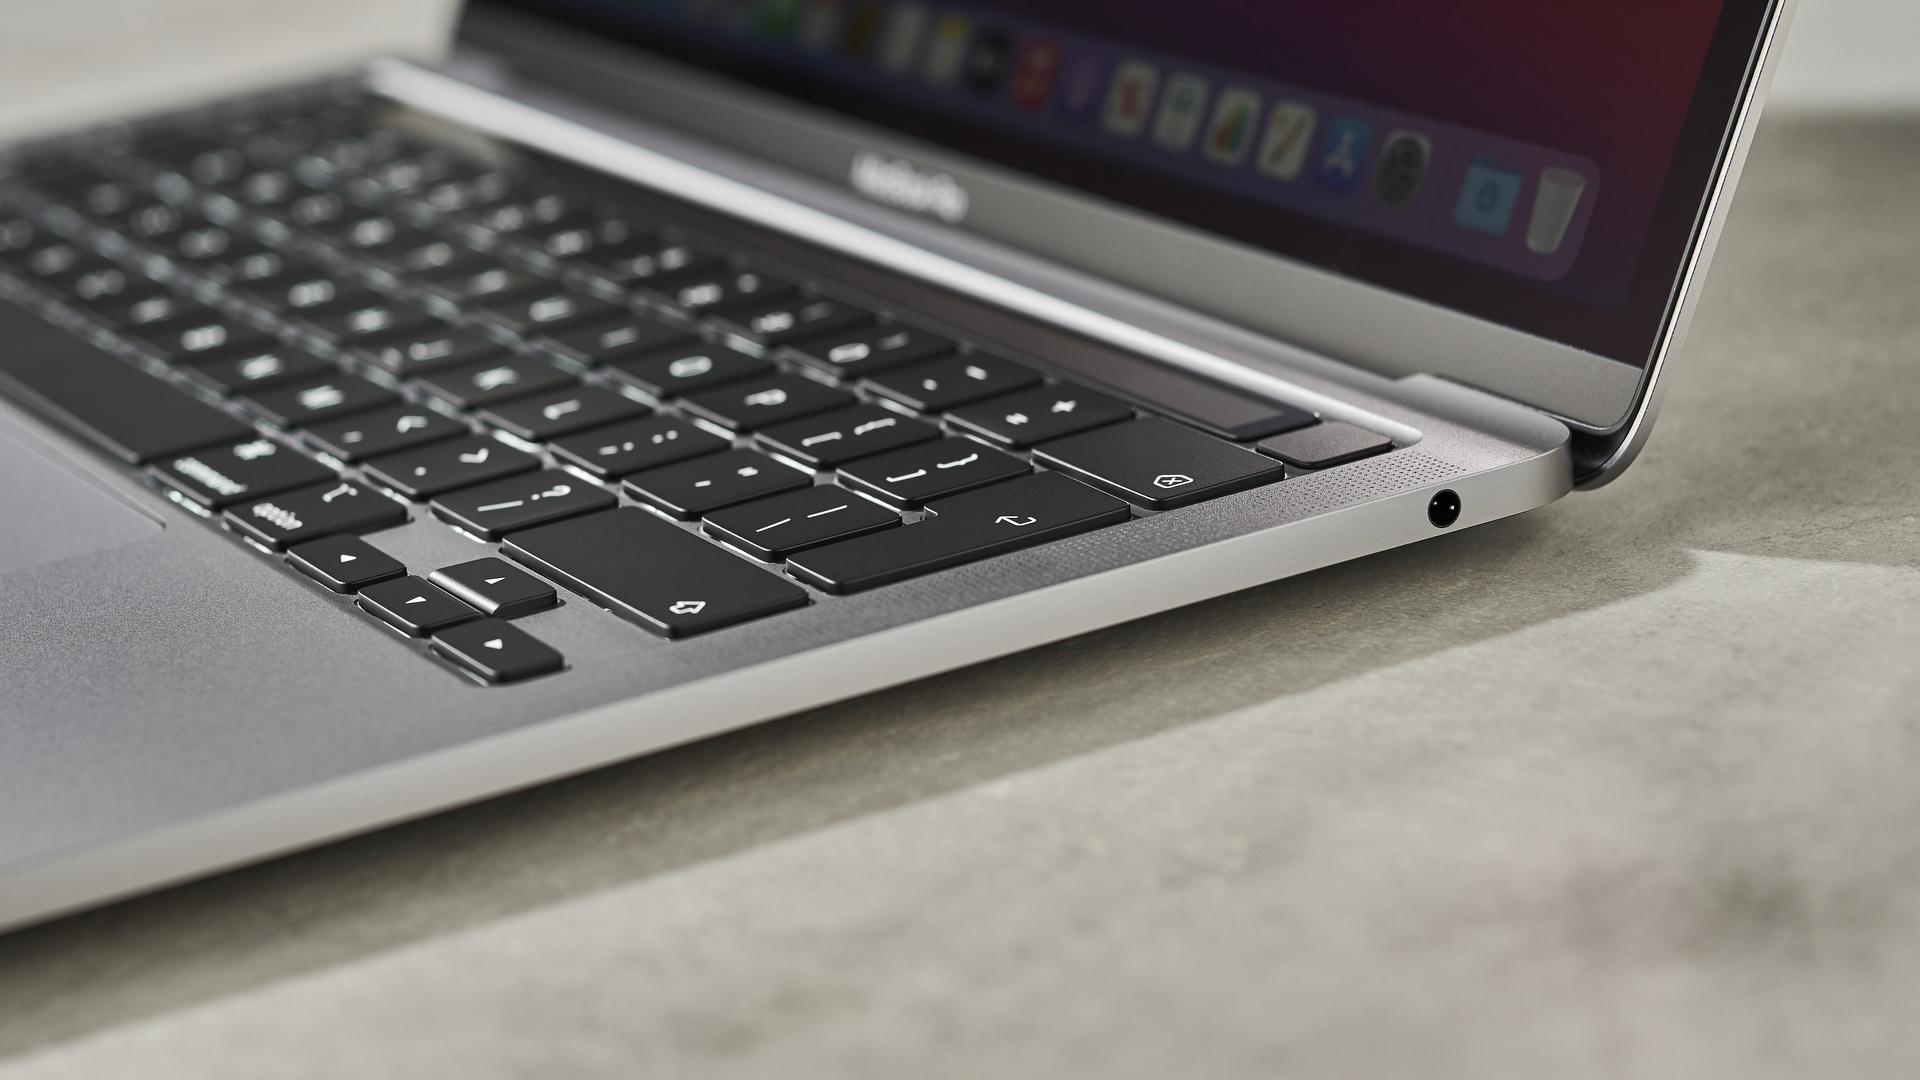 Apple MacBook Pro 13-inch (M1, 2020) on a desk